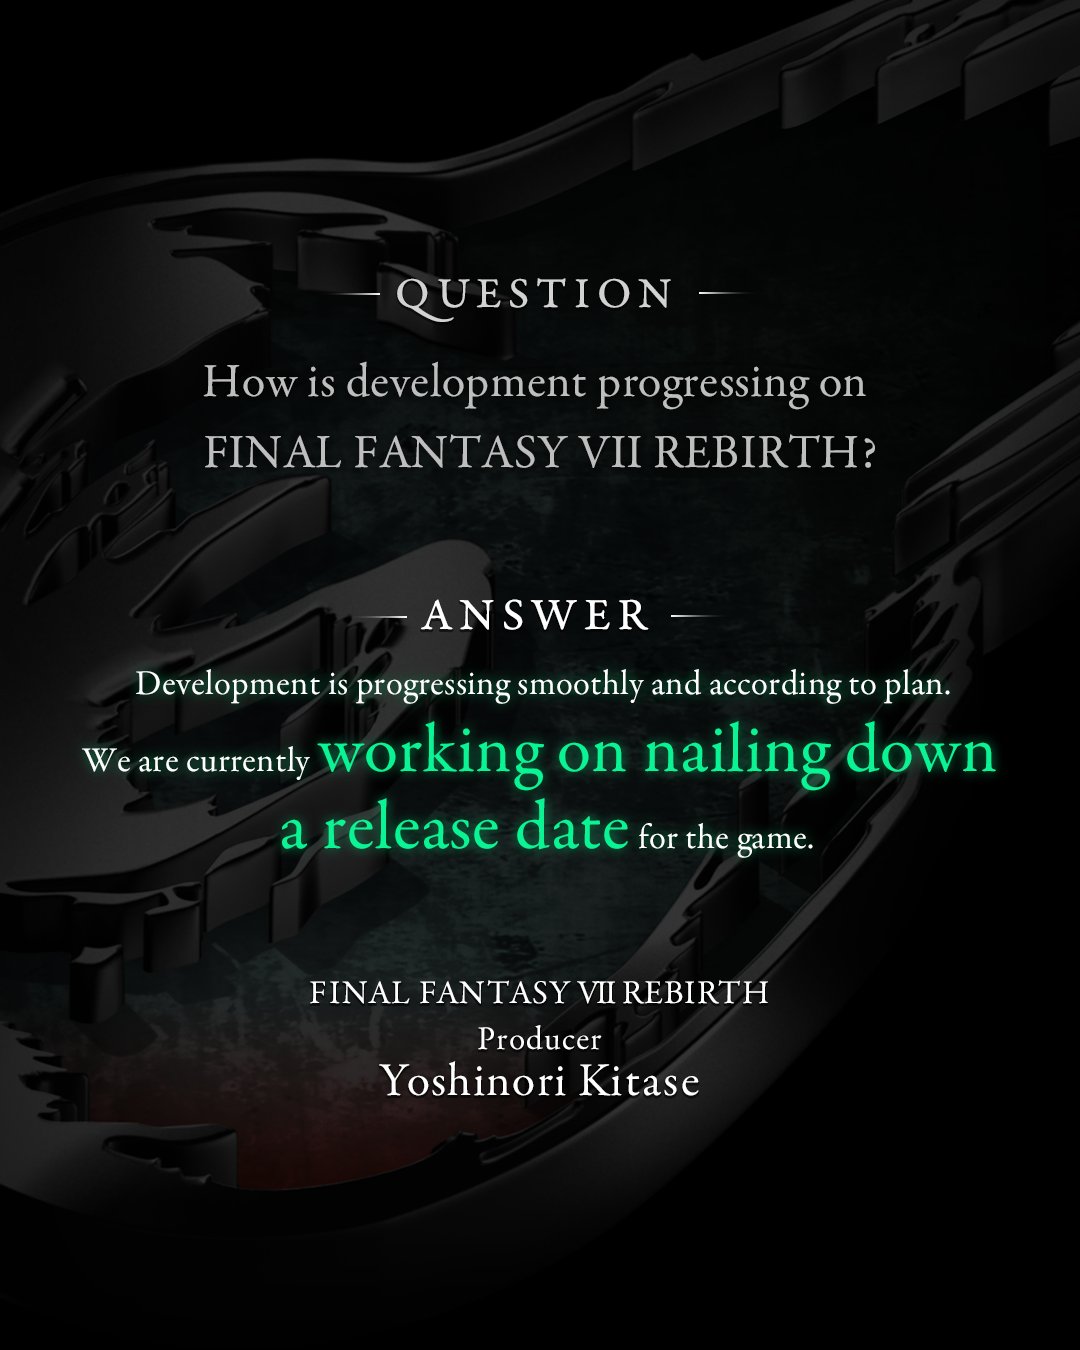 FINAL FANTASY VII on X: Final Fantasy VII Rebirth Developer